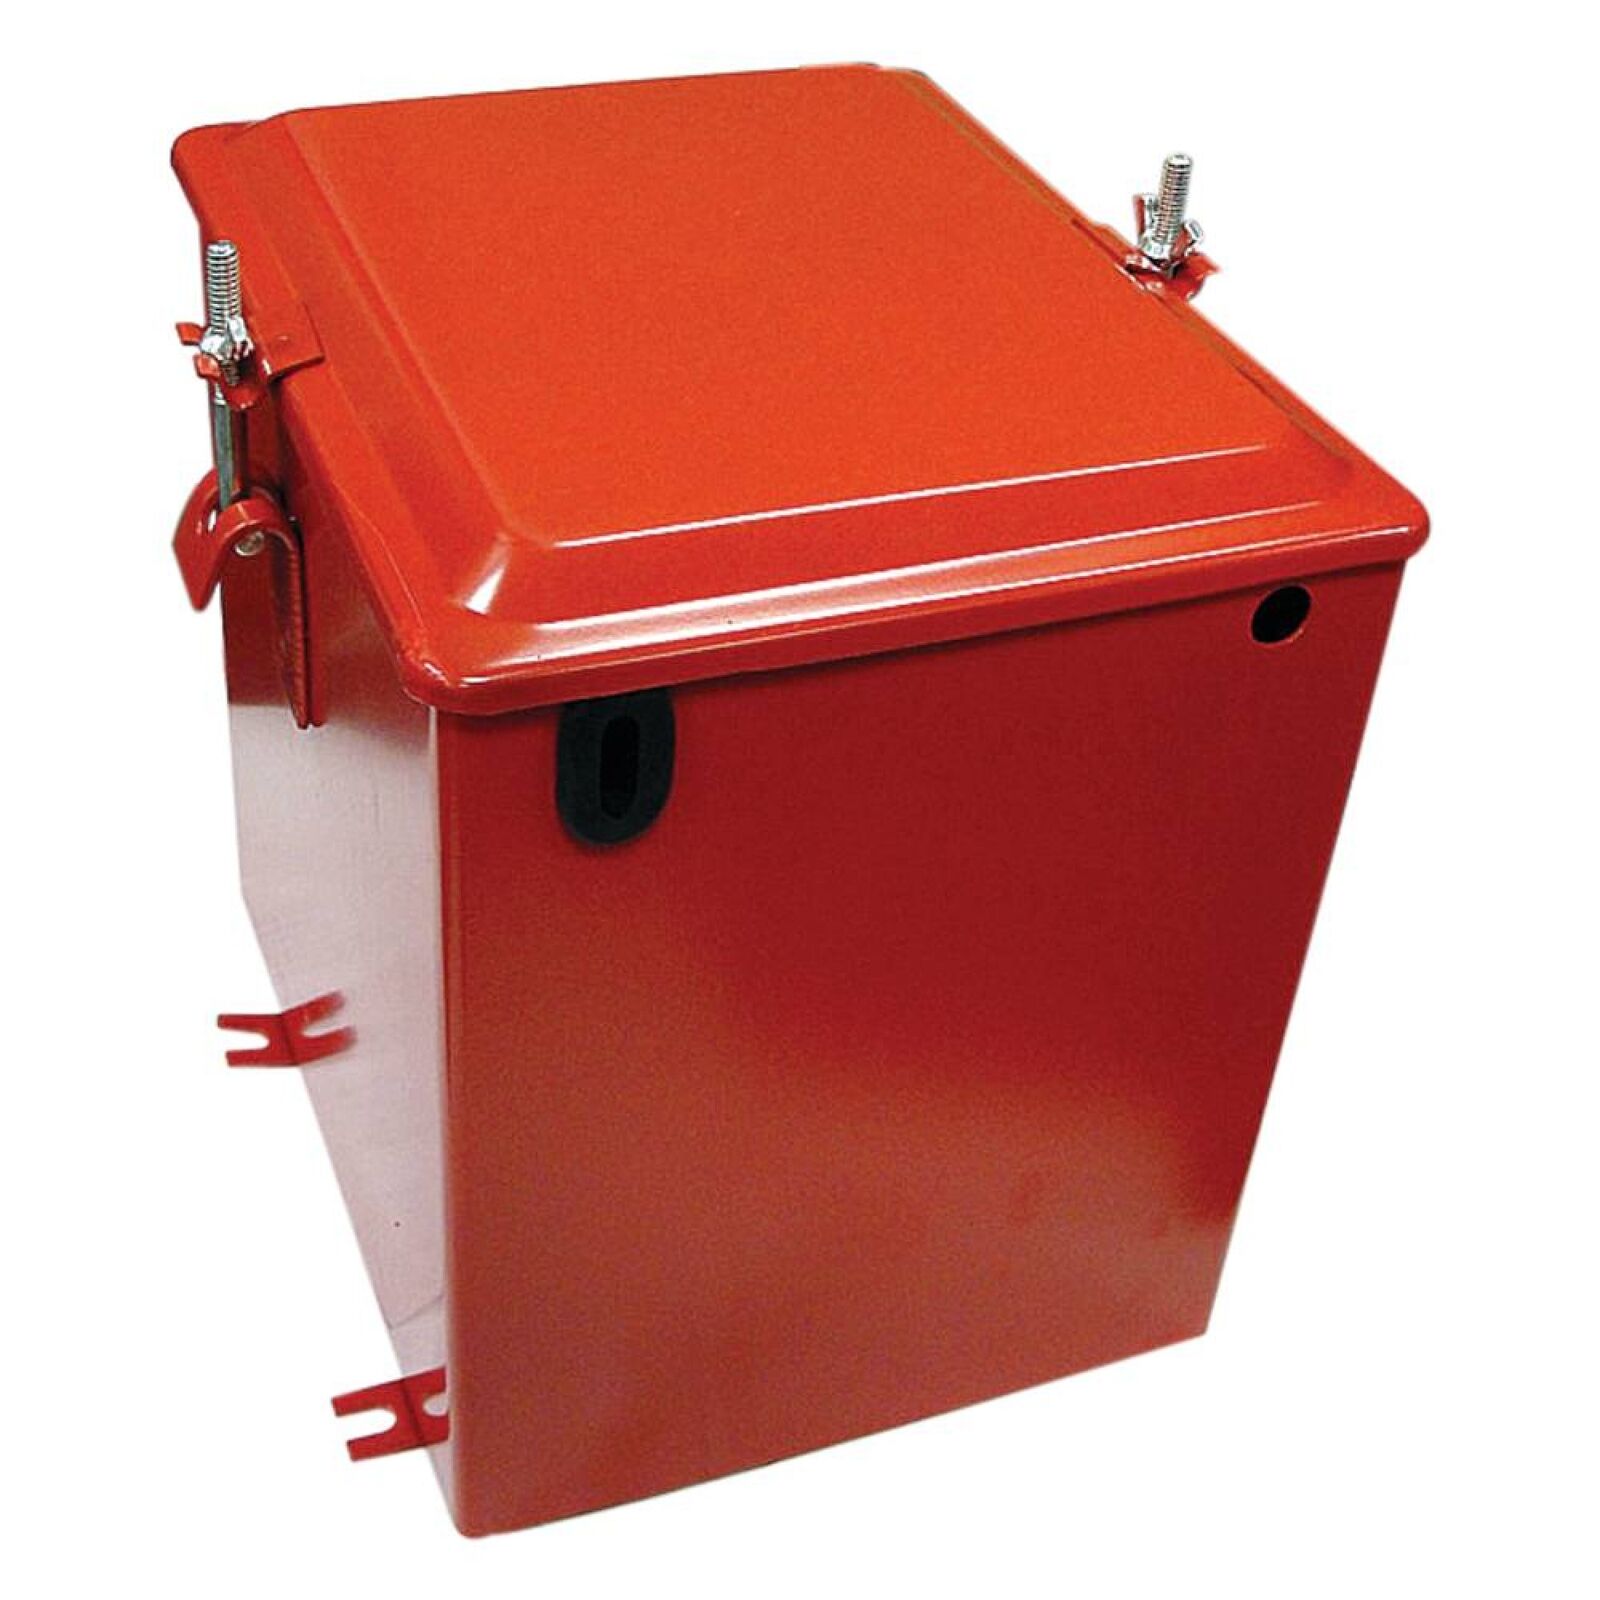 New Battery Box For Case International Harvester C Super A Super C 1711-1022